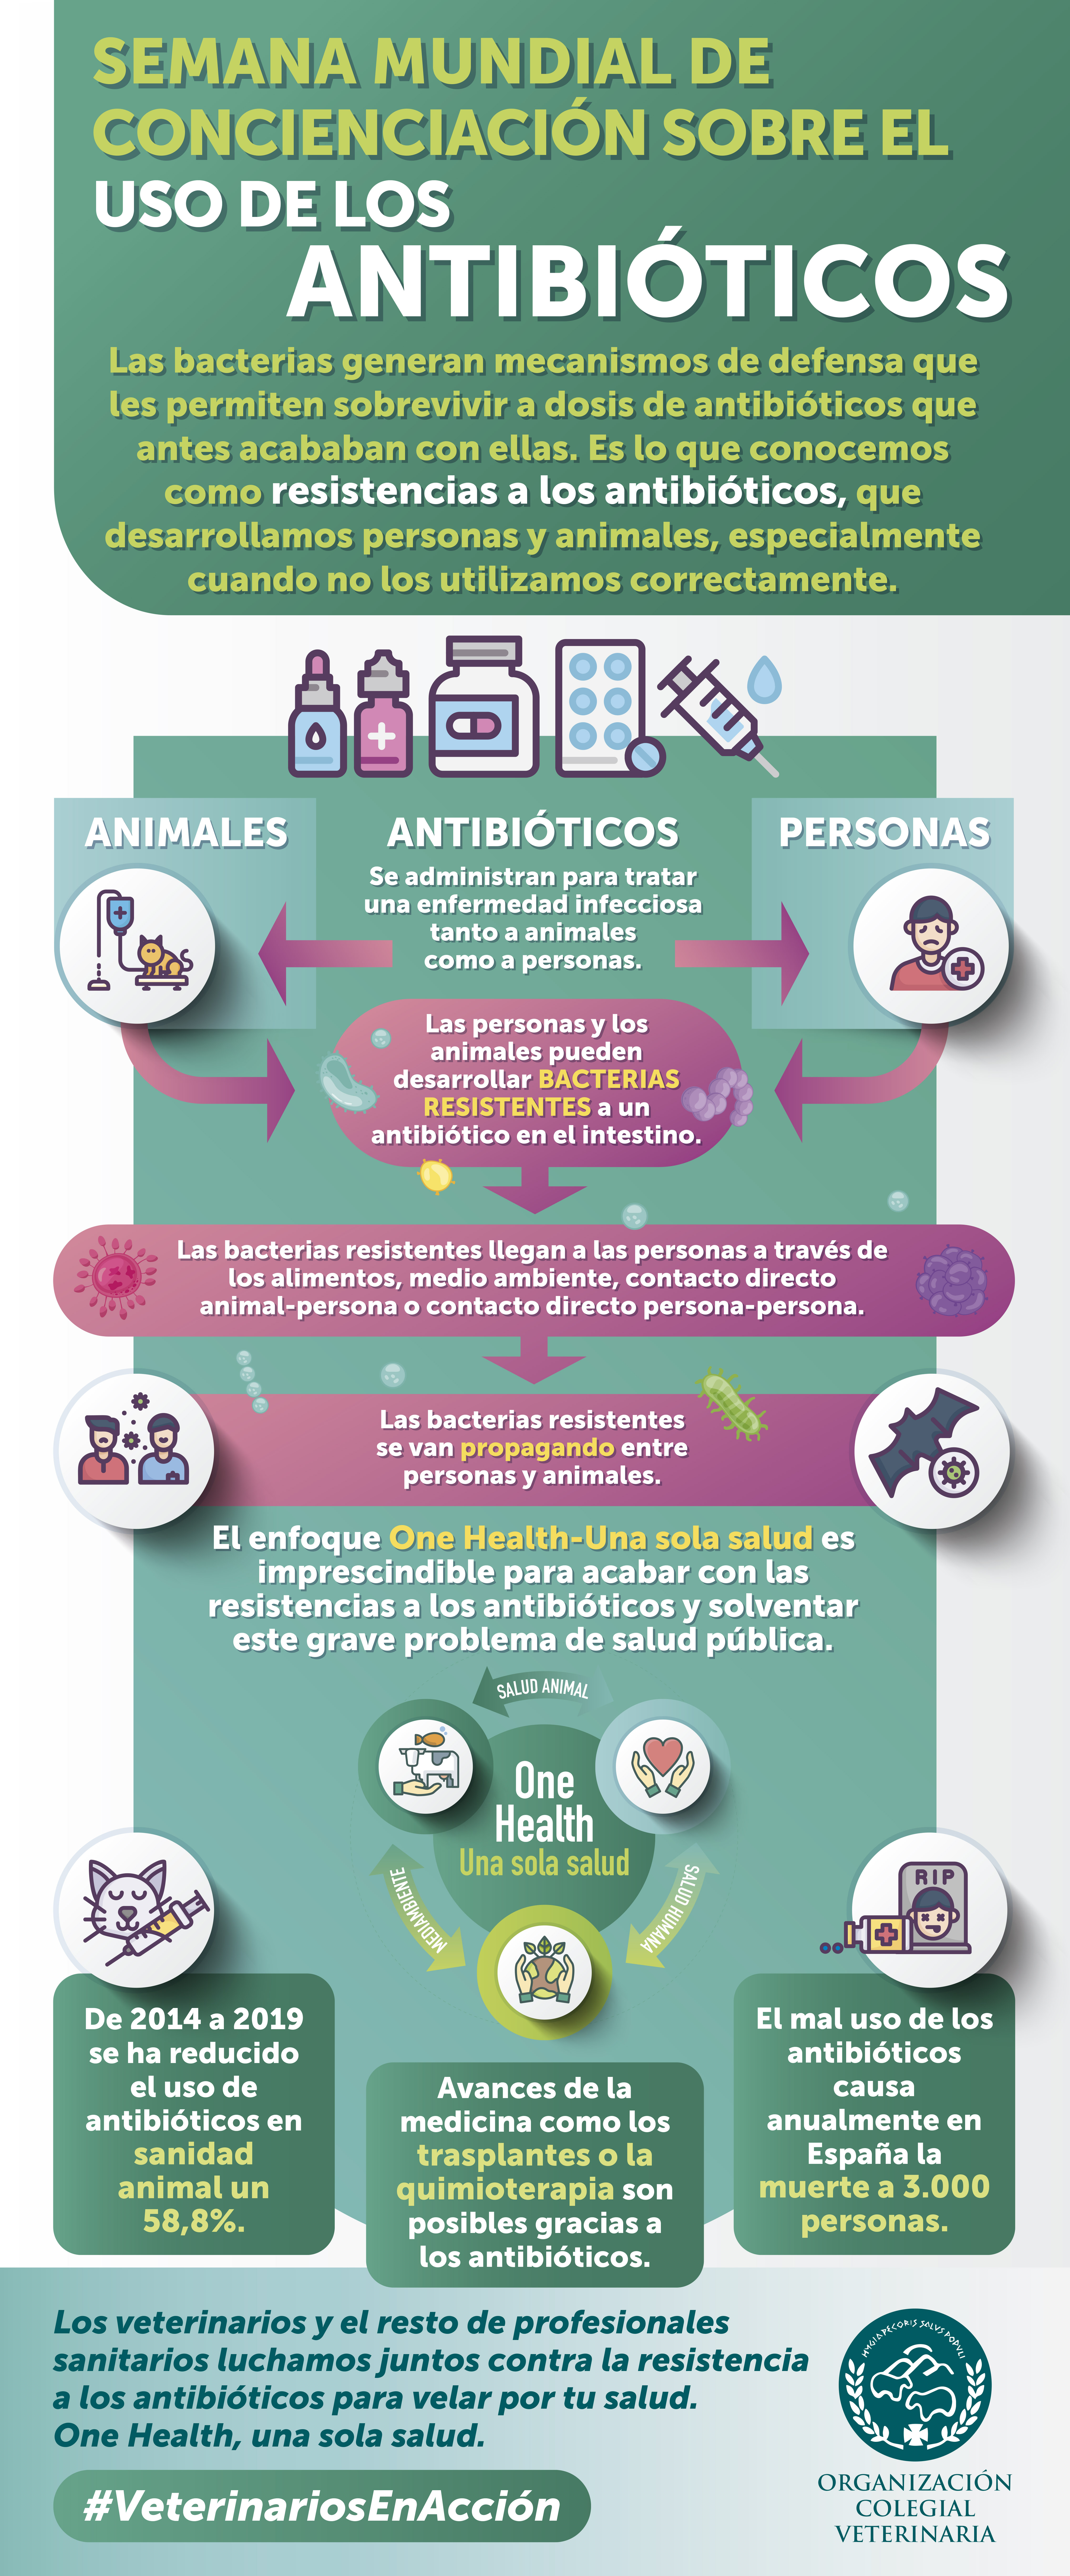 Semana del uso responsable de antibióticos